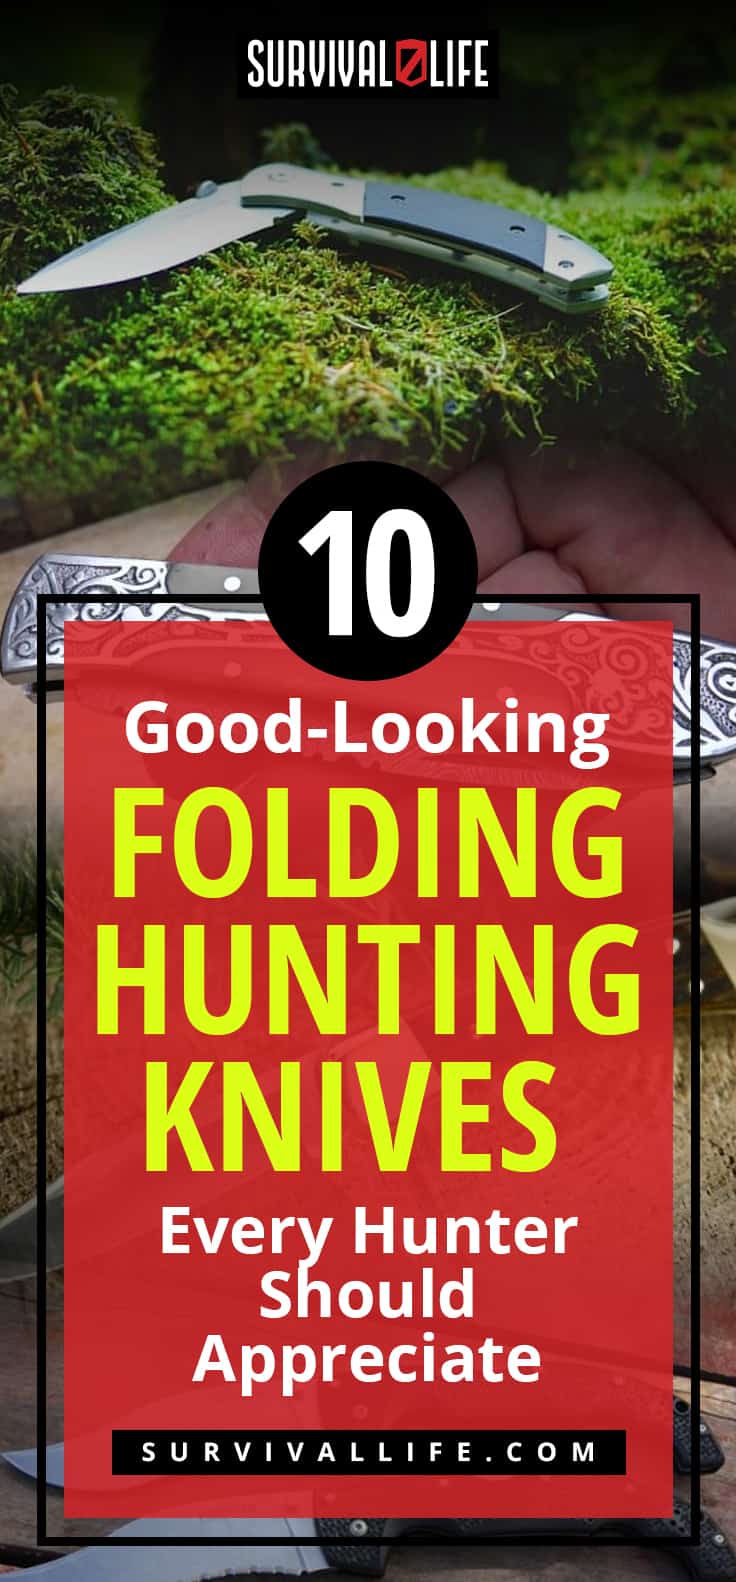 Folding Hunting Knives | 10 Good-Looking Folding Hunting Knives Every Hunter Should Appreciate